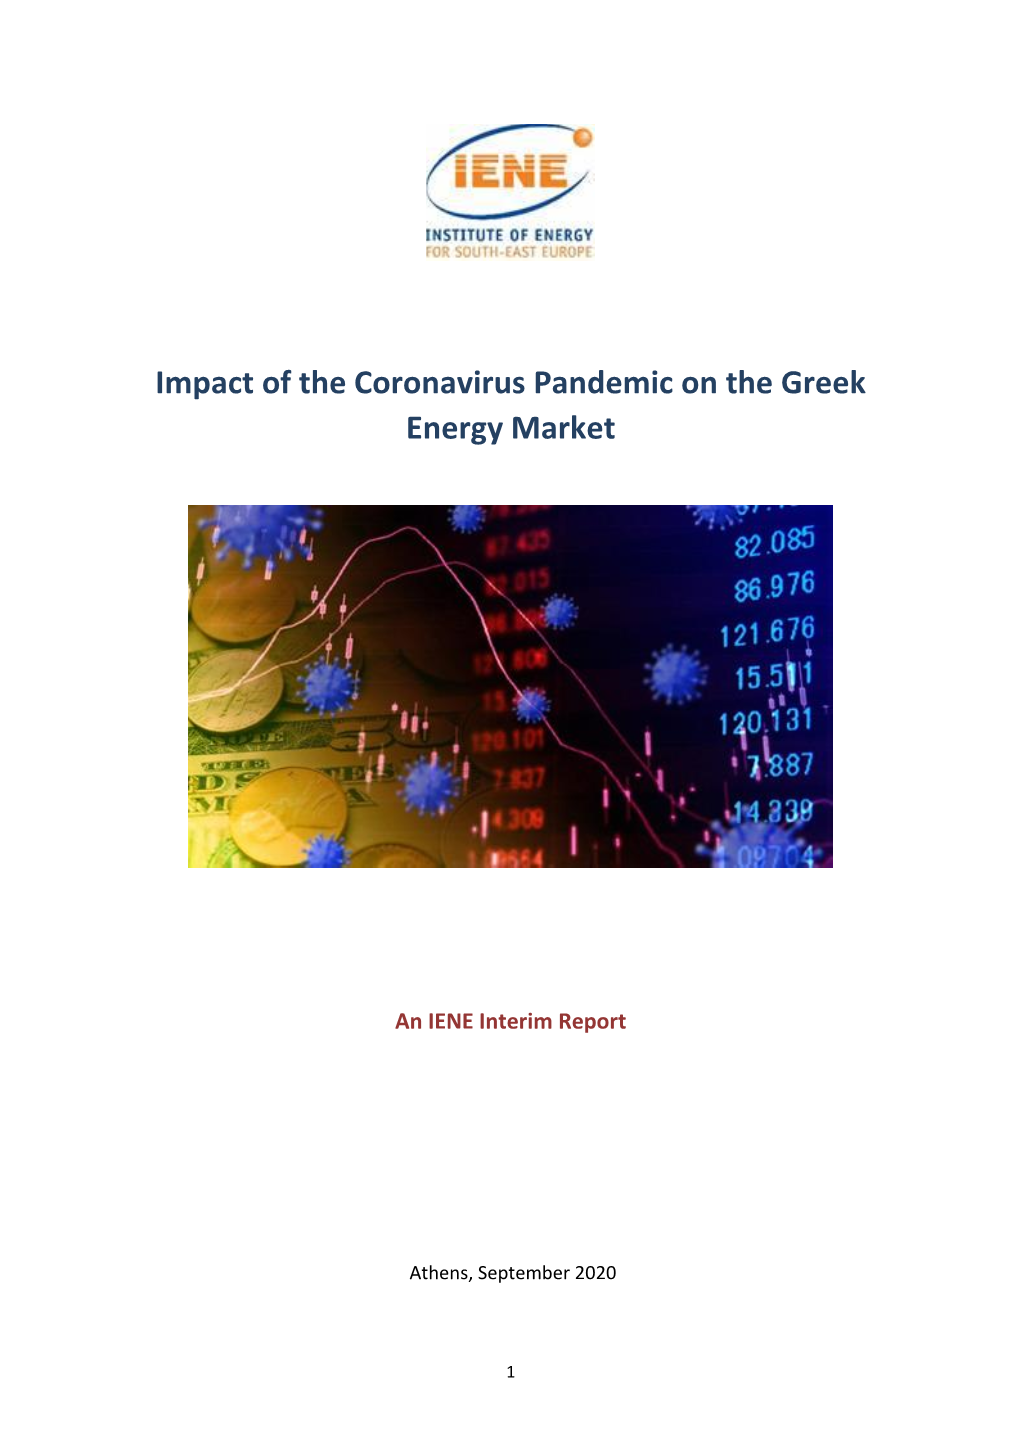 Impact of the Coronavirus Pandemic on the Greek Energy Market